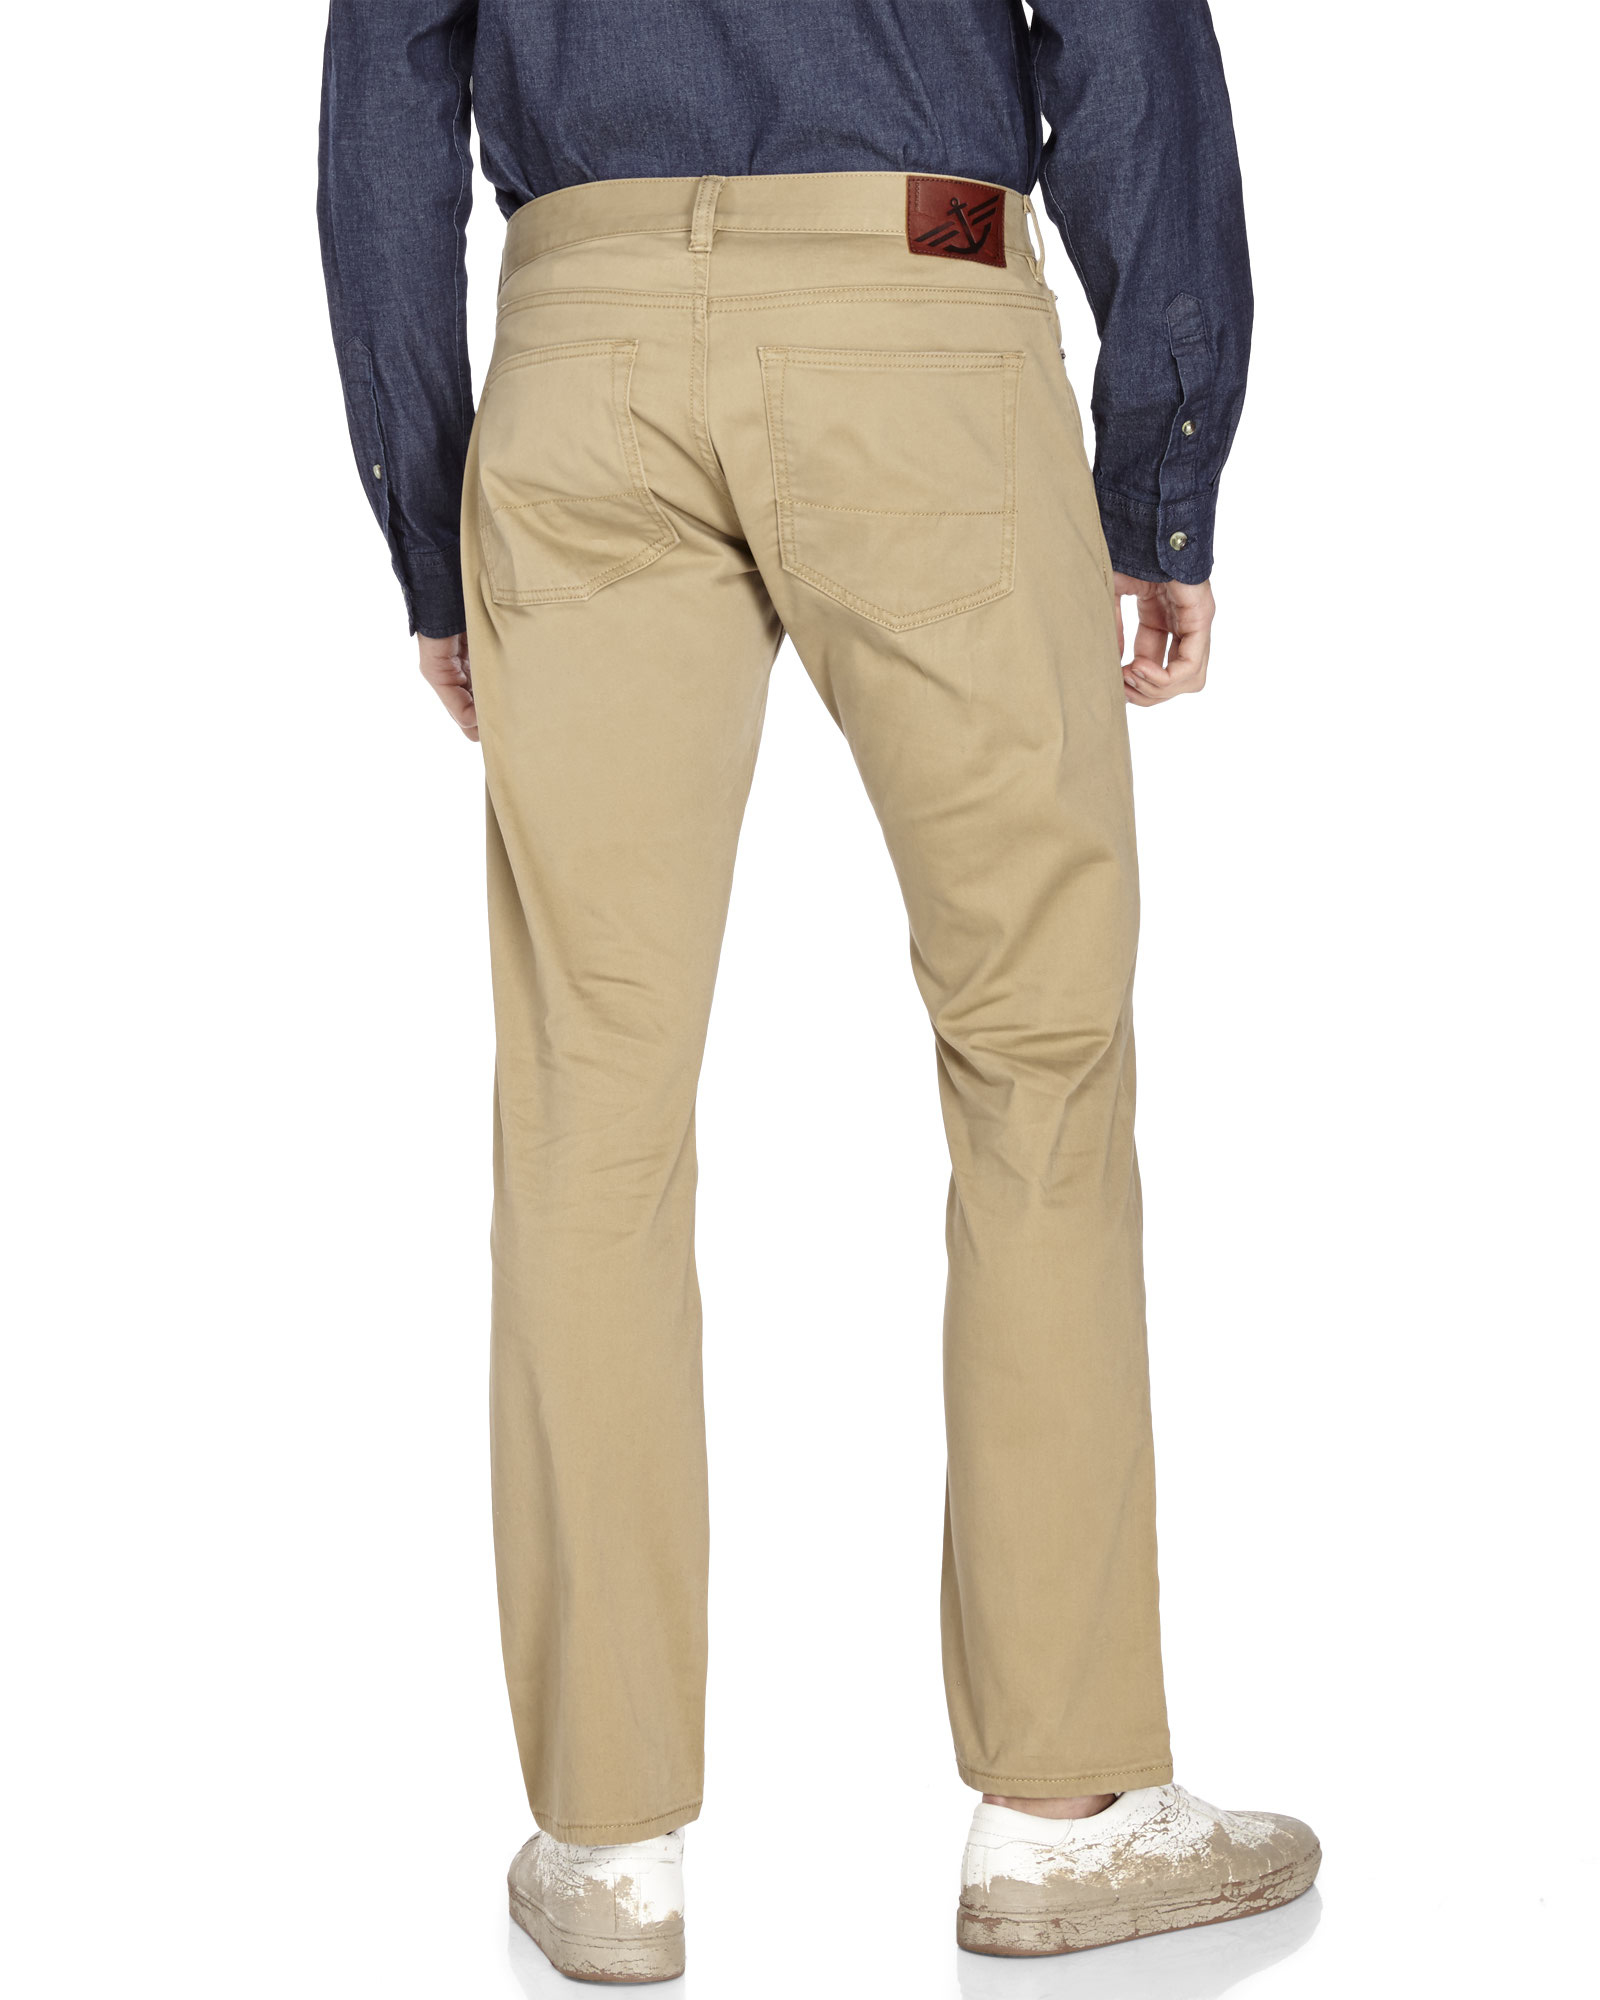 Lyst - Dockers Slim Fit 5-Pocket Pants in Natural for Men